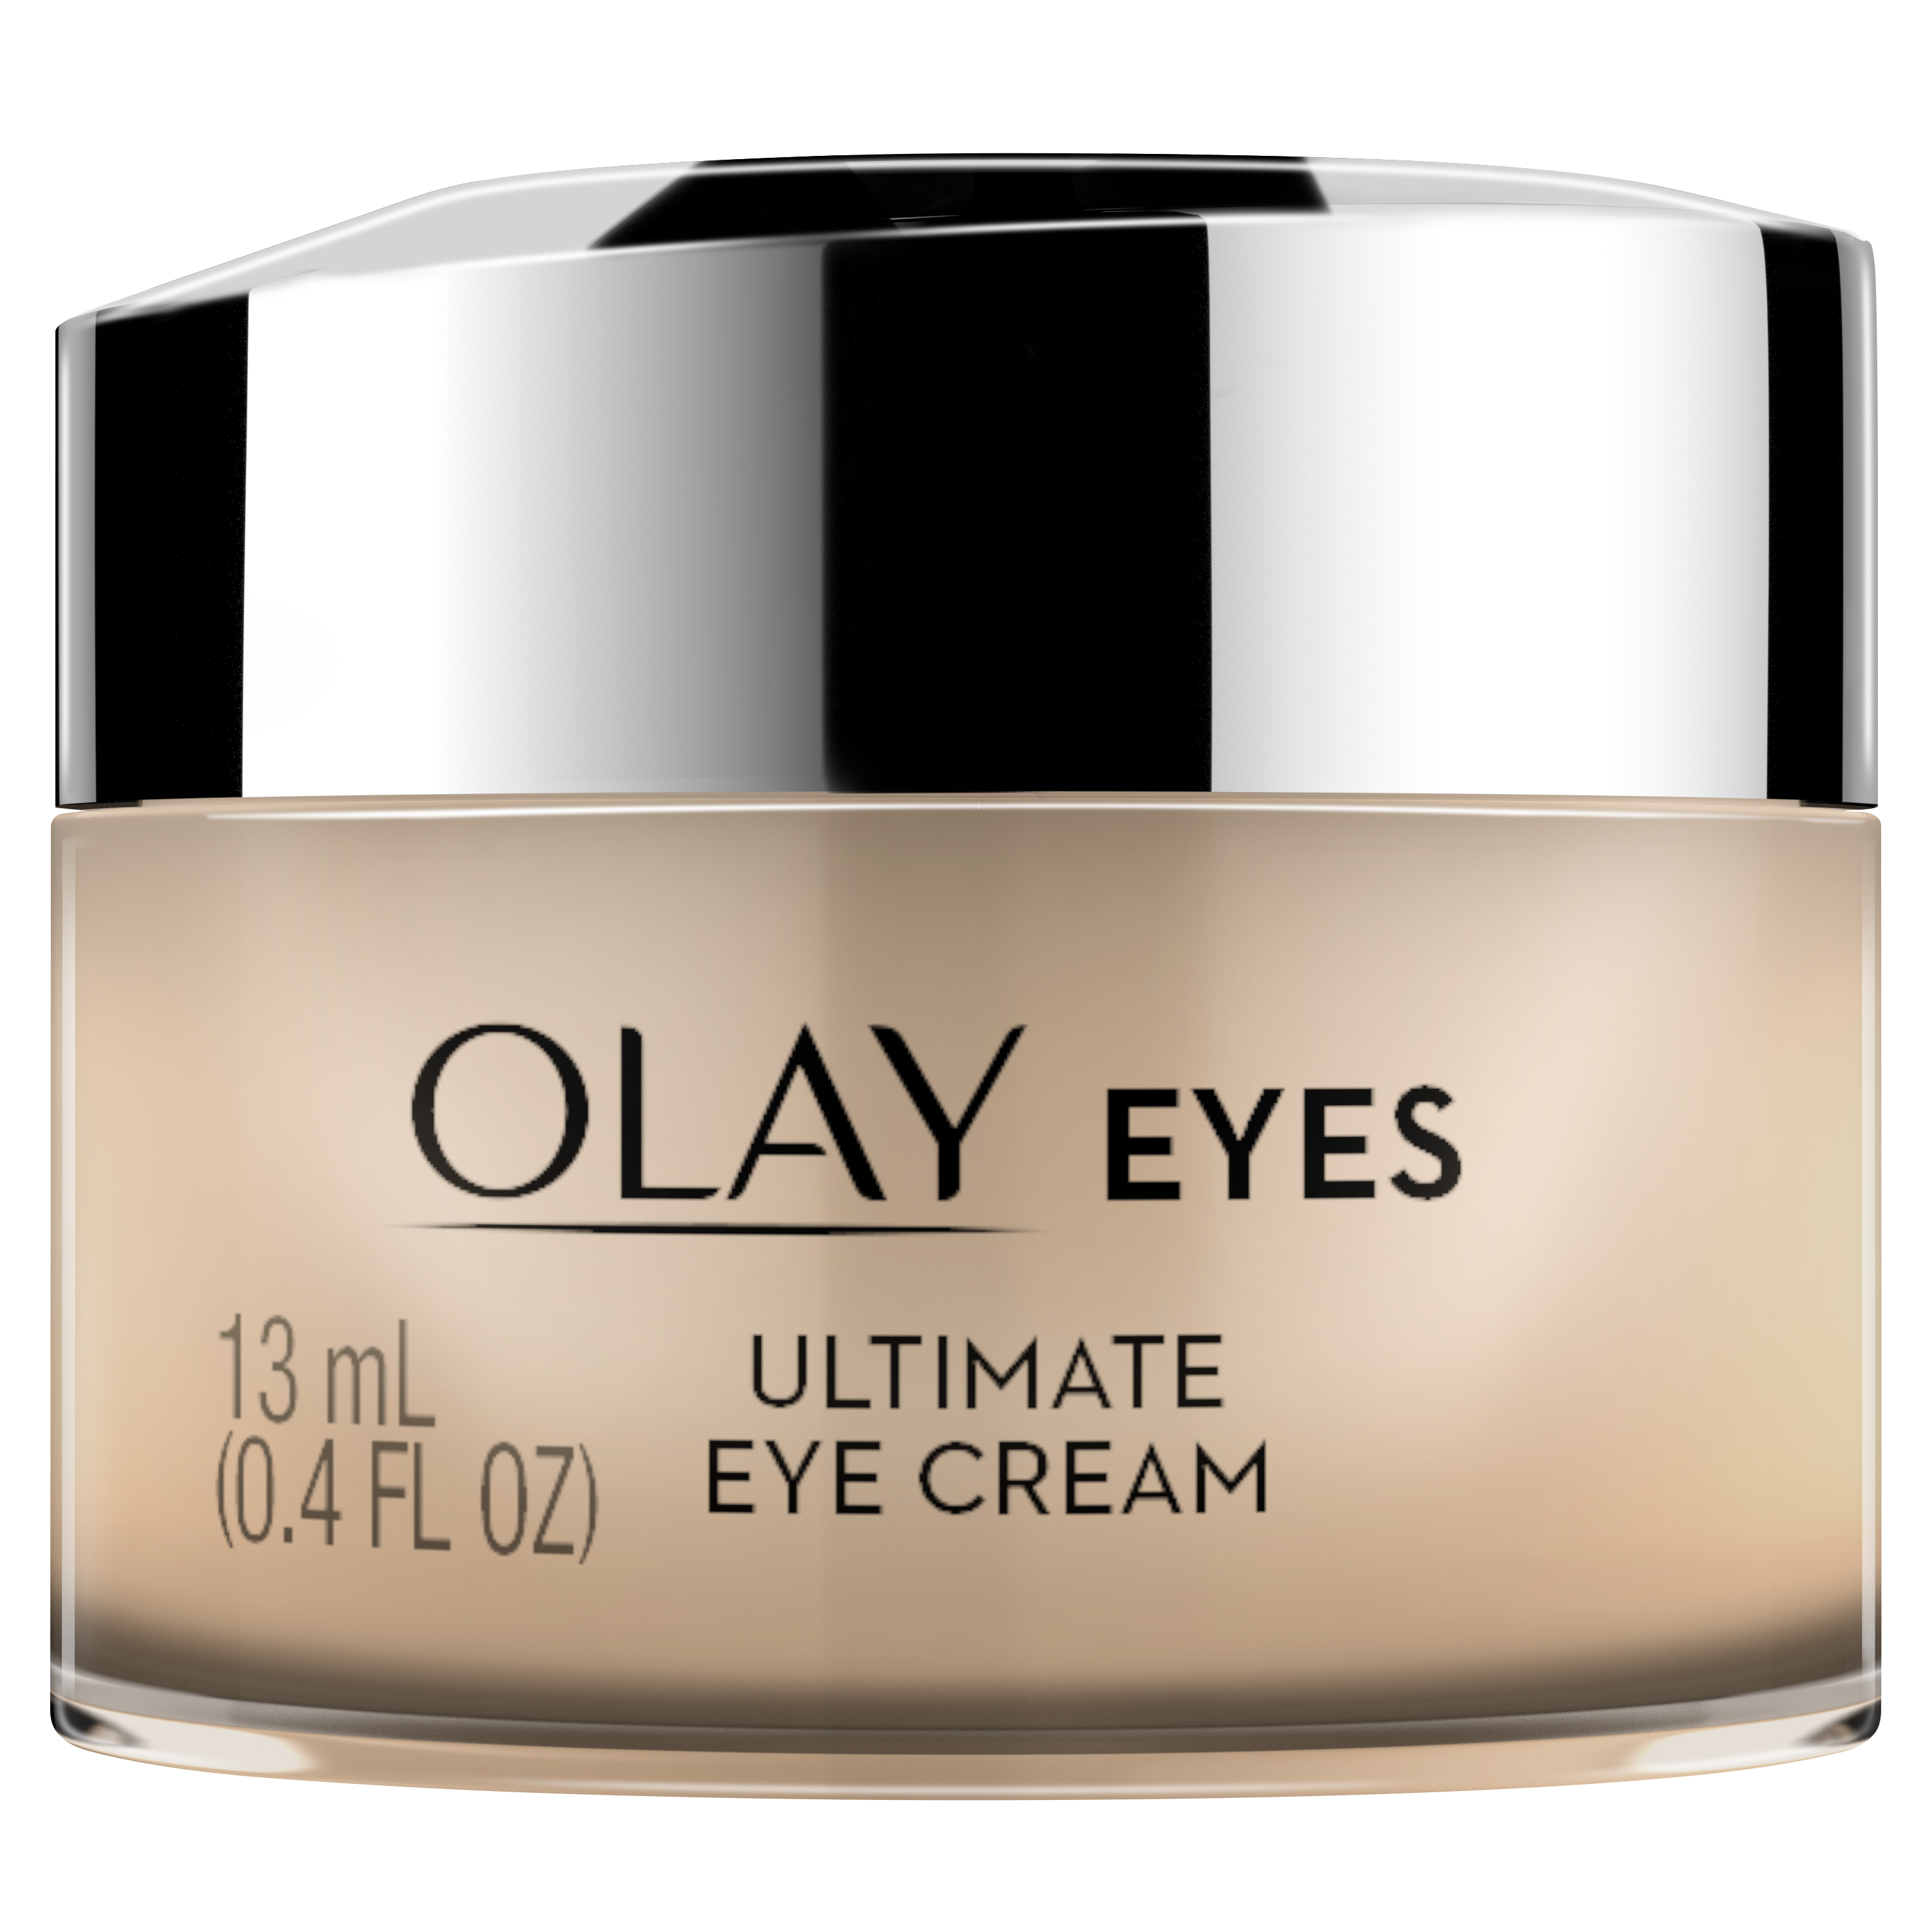 Olay Eyes Ultimate Eye Cream for Wrinkles, Puffy Eyes and Dark Circles